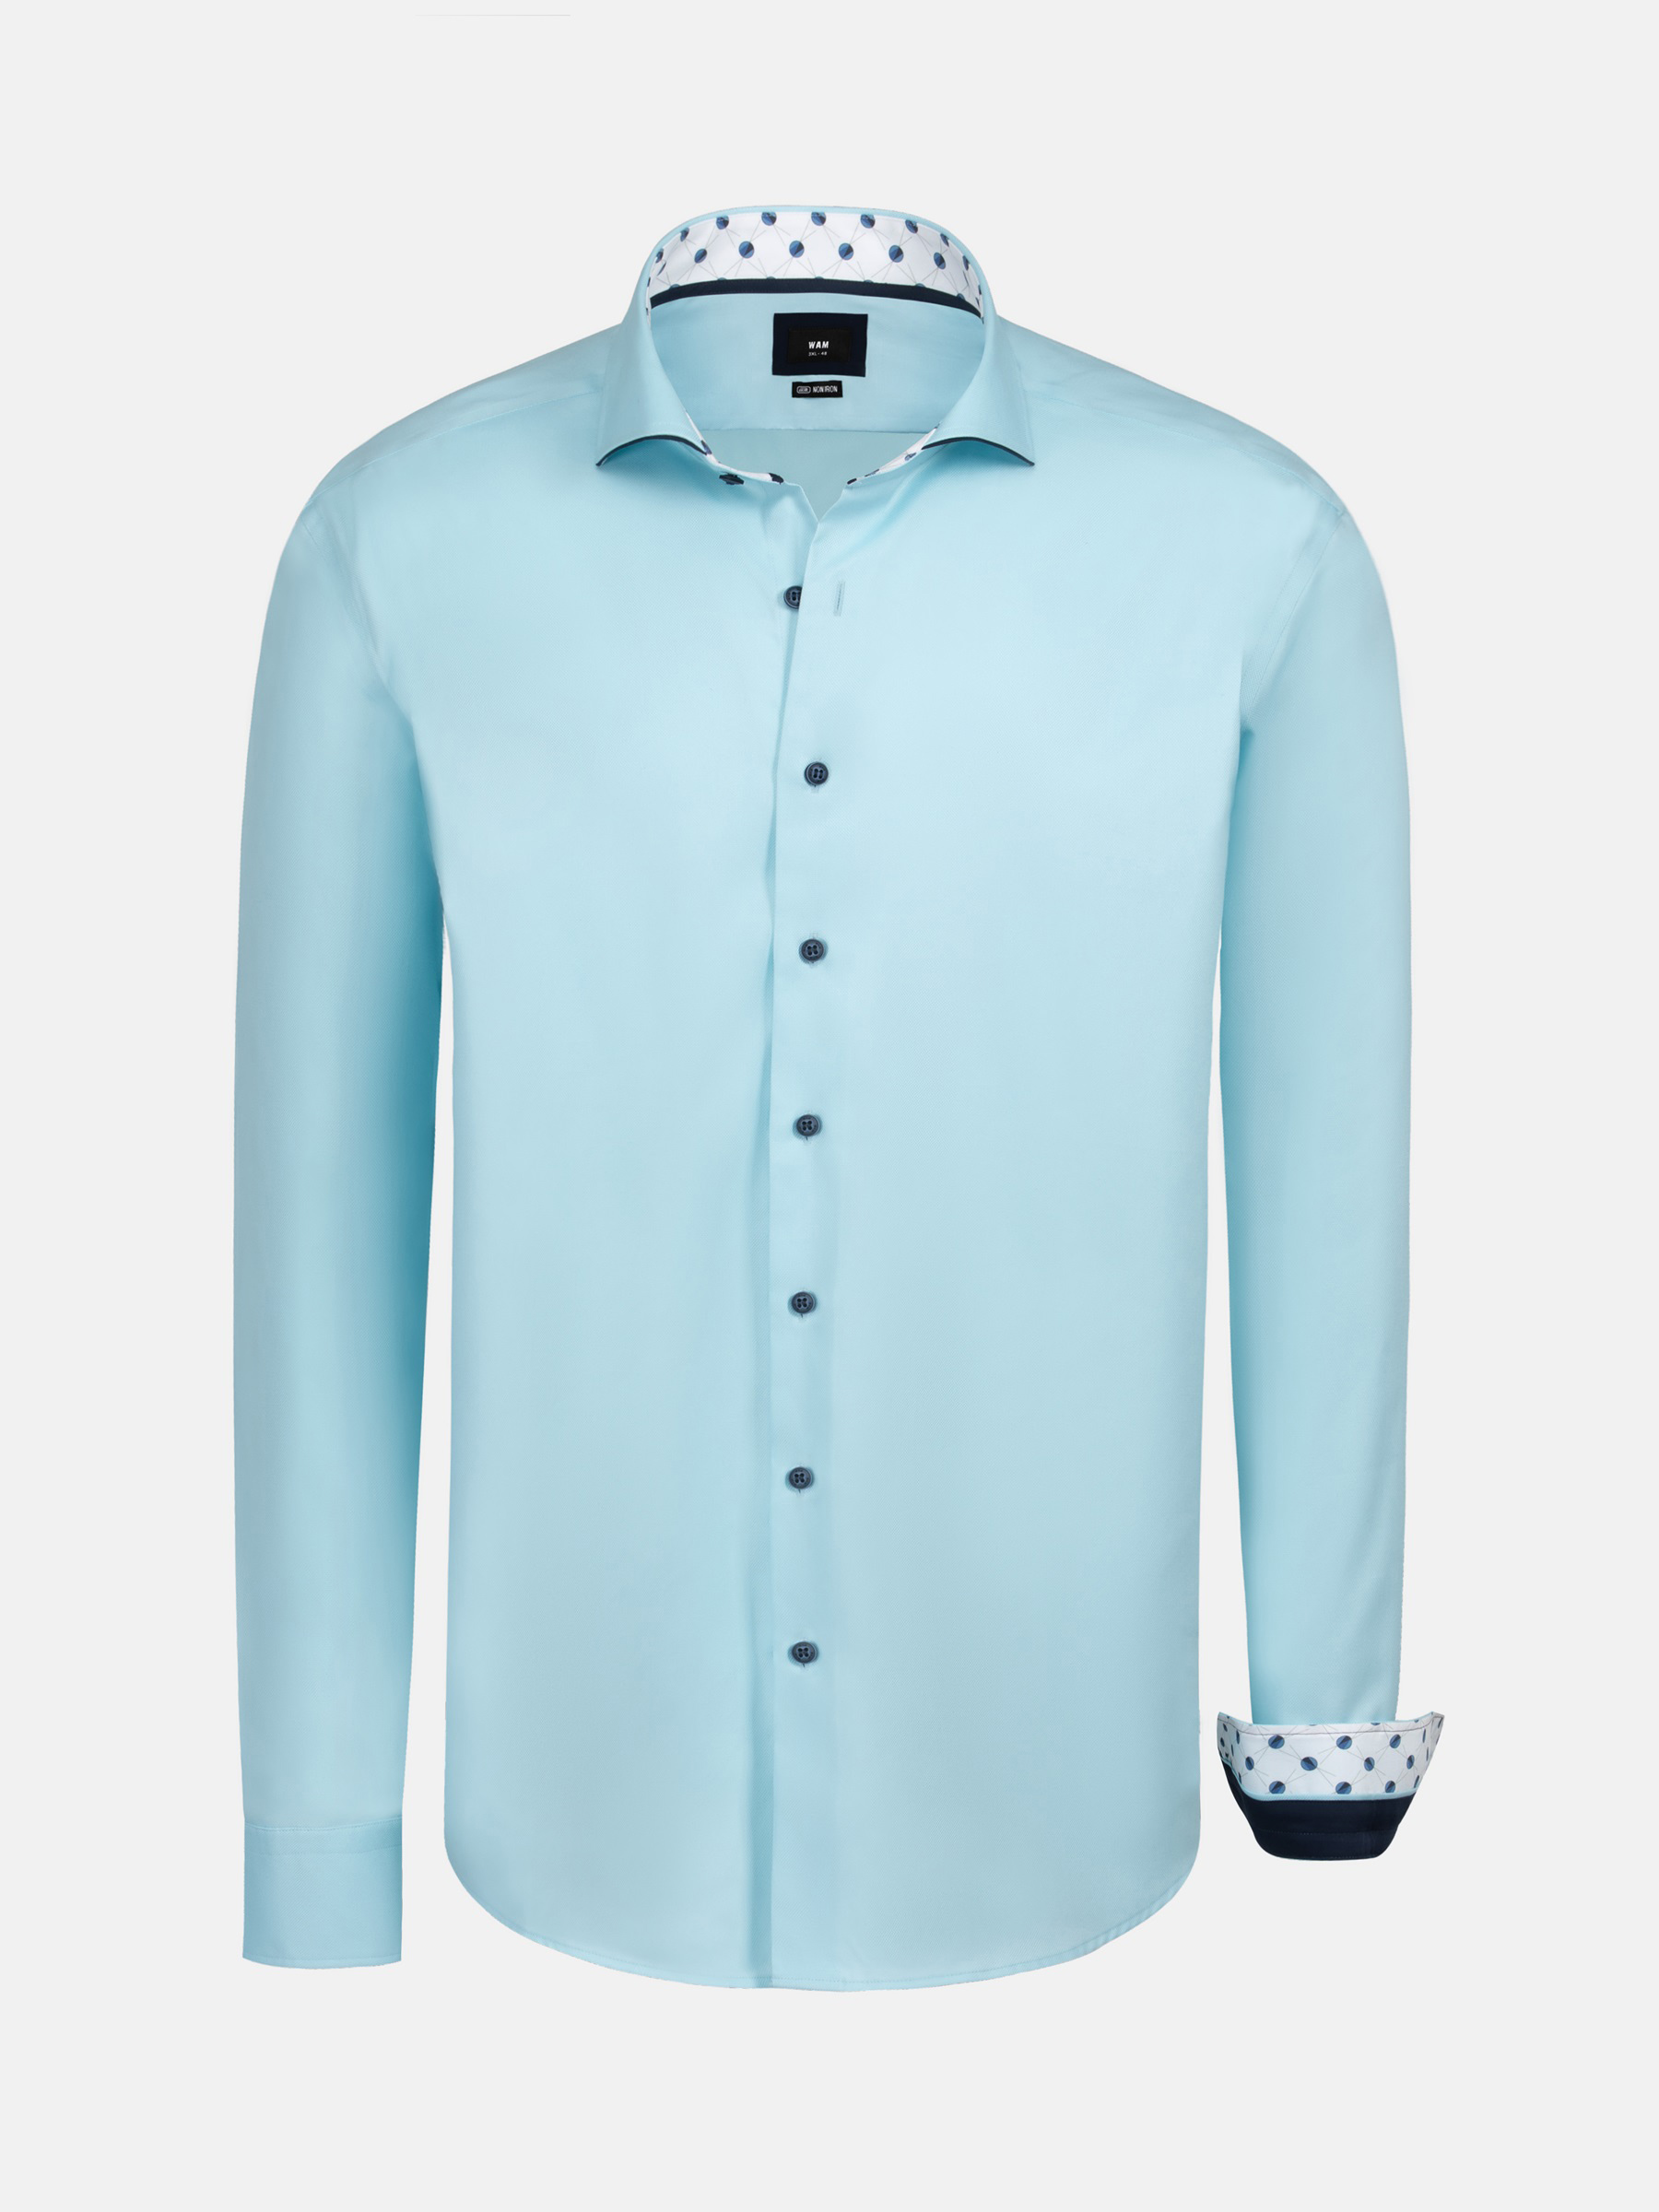 WAM Denim Overhemd Lange Mouw 75753 Mykonos Turquoise-